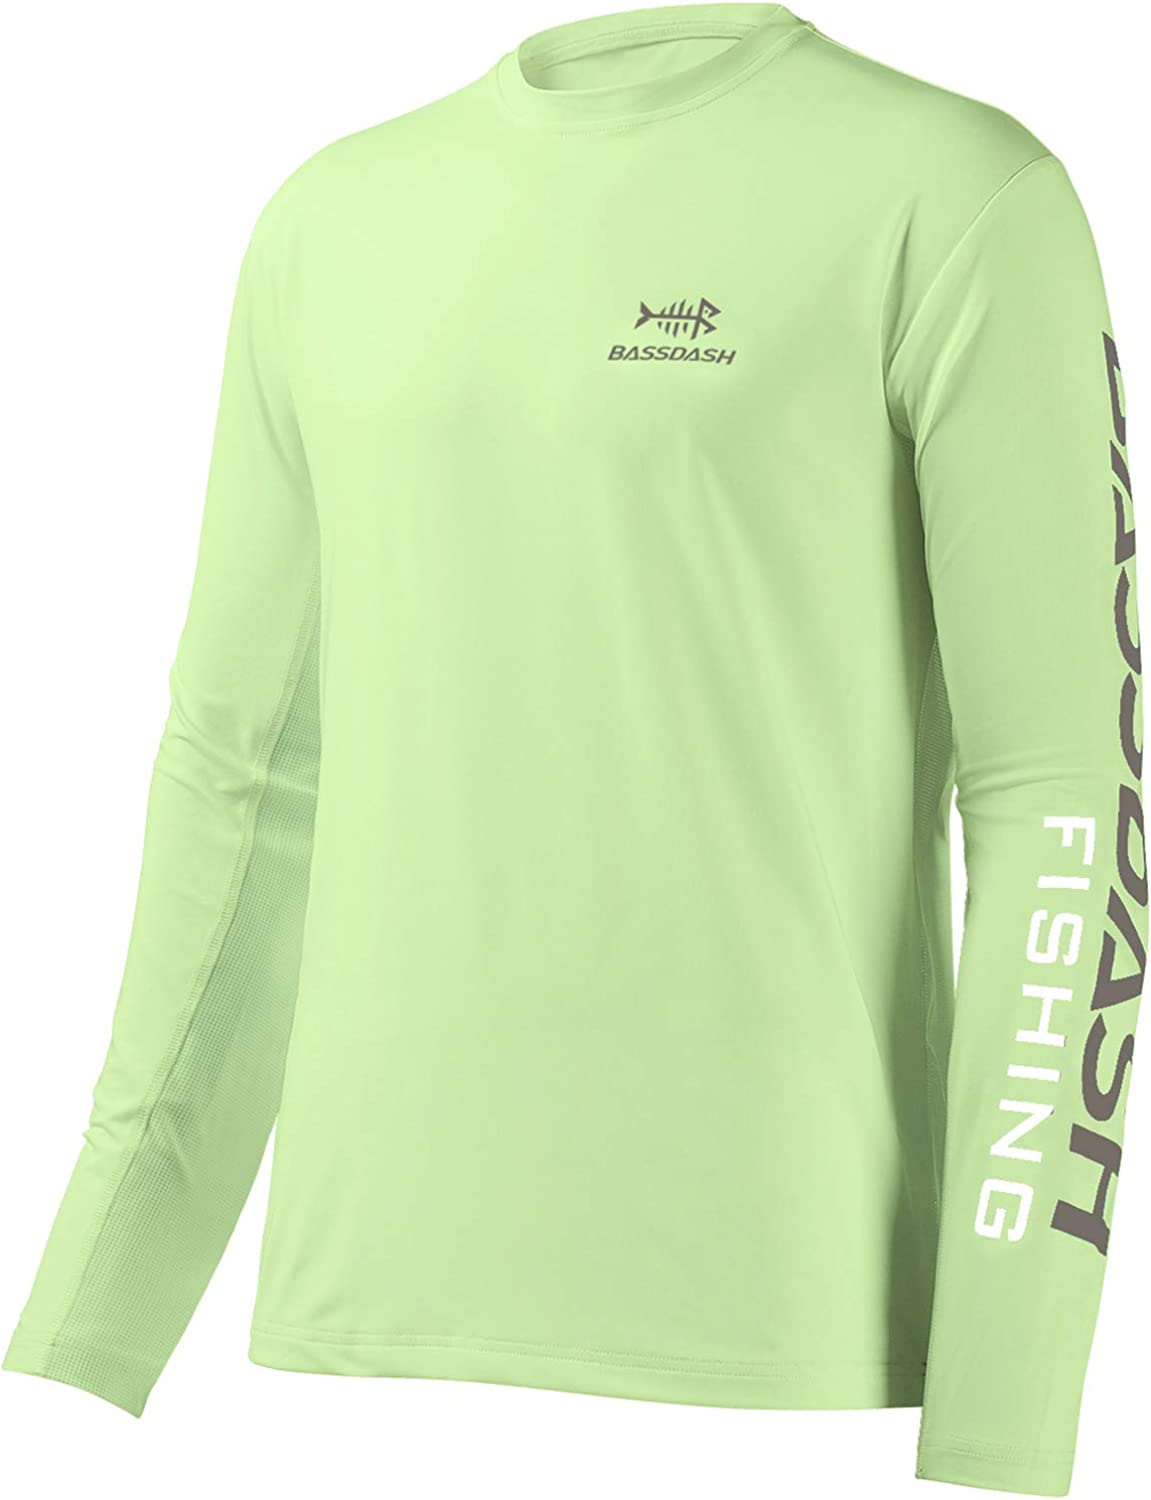 Bassdash Men's UV Sun Protection UPF 50+ Fishing Shirts Long Sleeve Tee